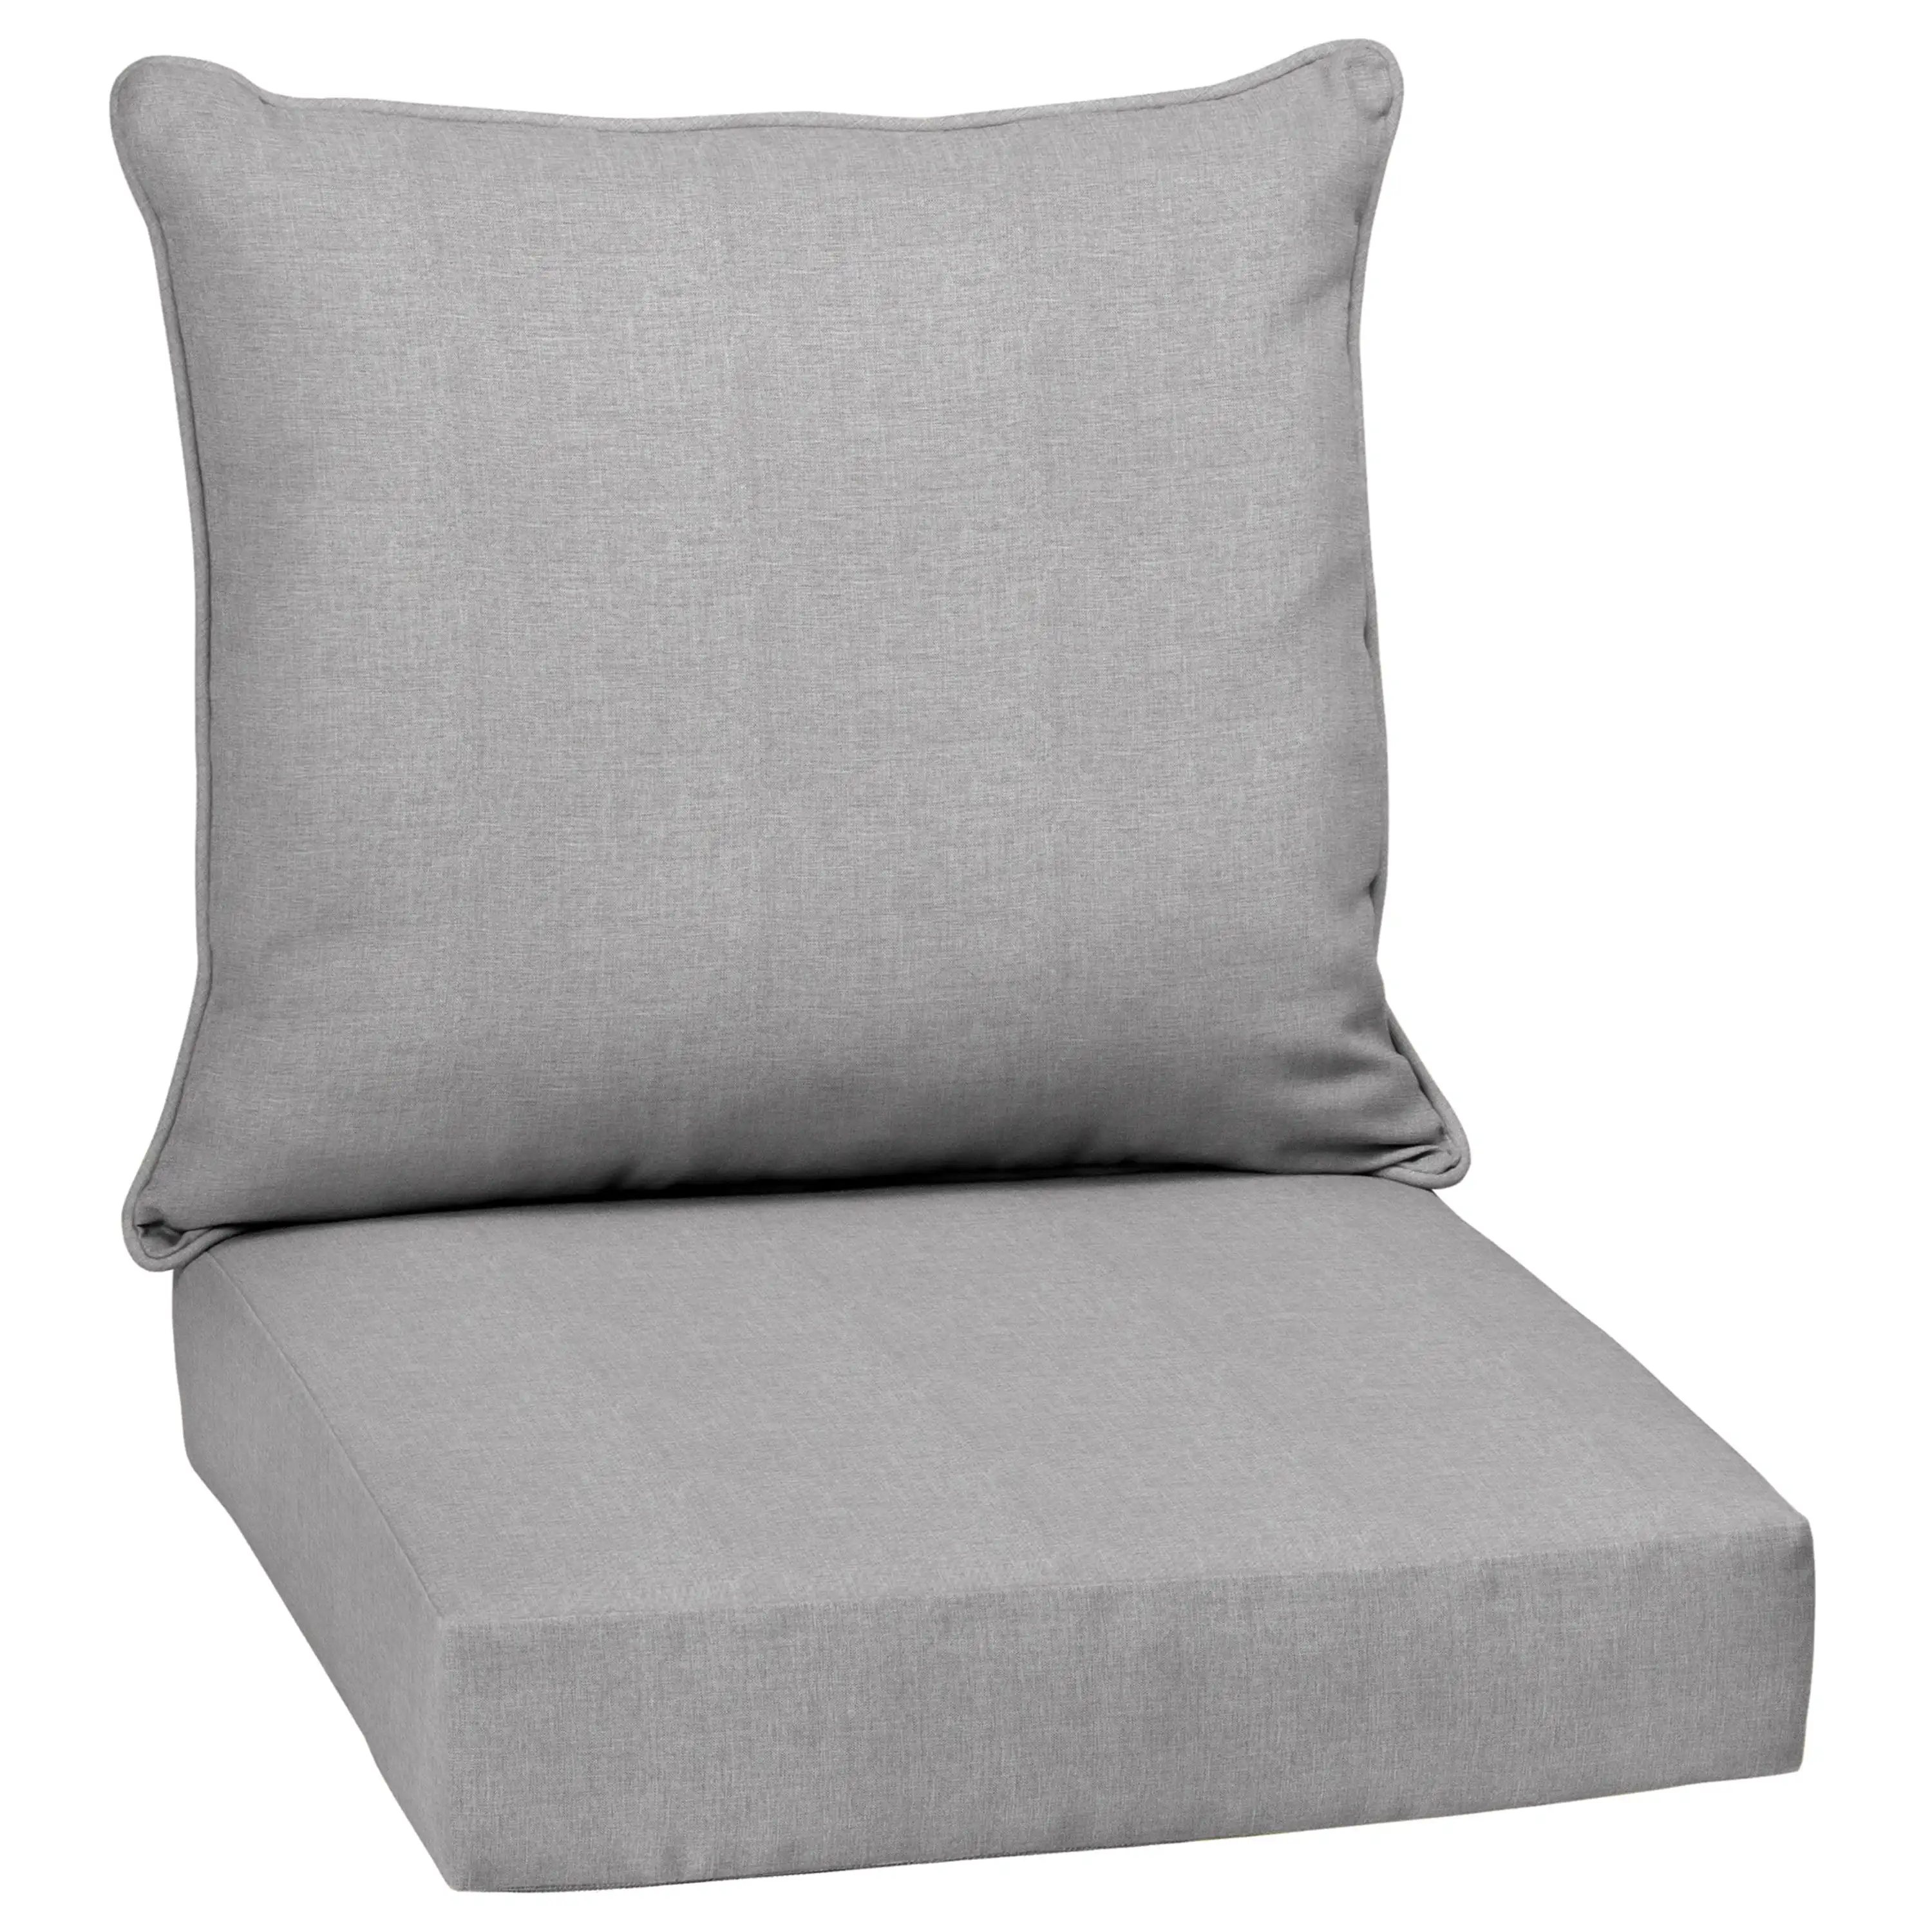 

Arden Selections Performance Outdoor Deep Seating Cushion Set 24 x 24, Paloma Valencia